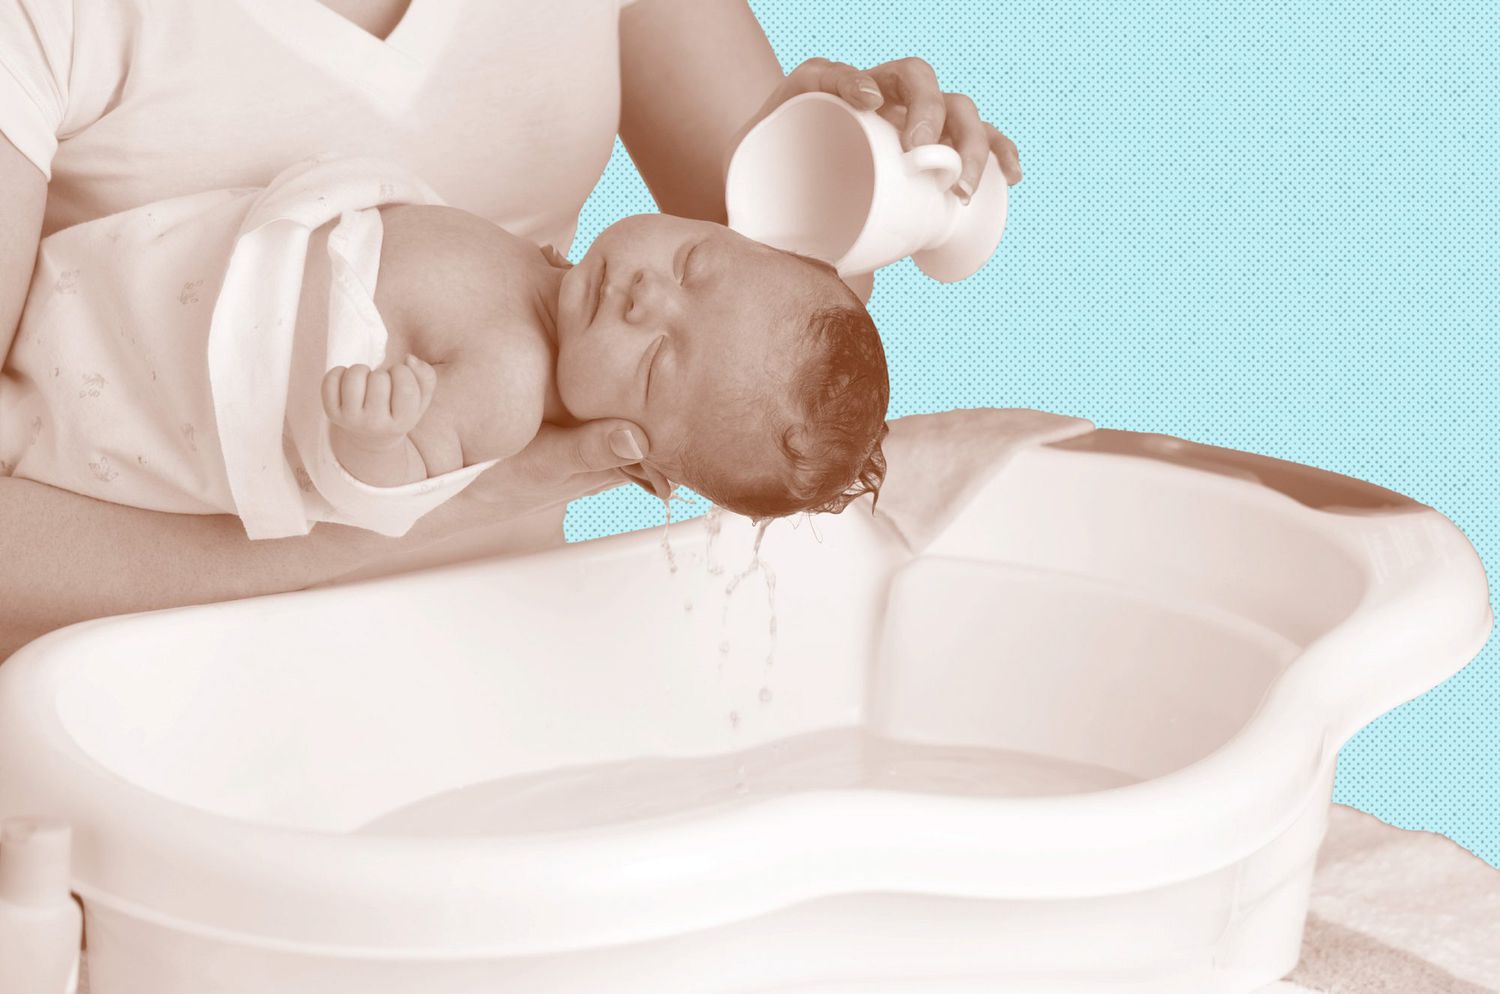 Baby S First Bath How To Bathe A Newborn Parents